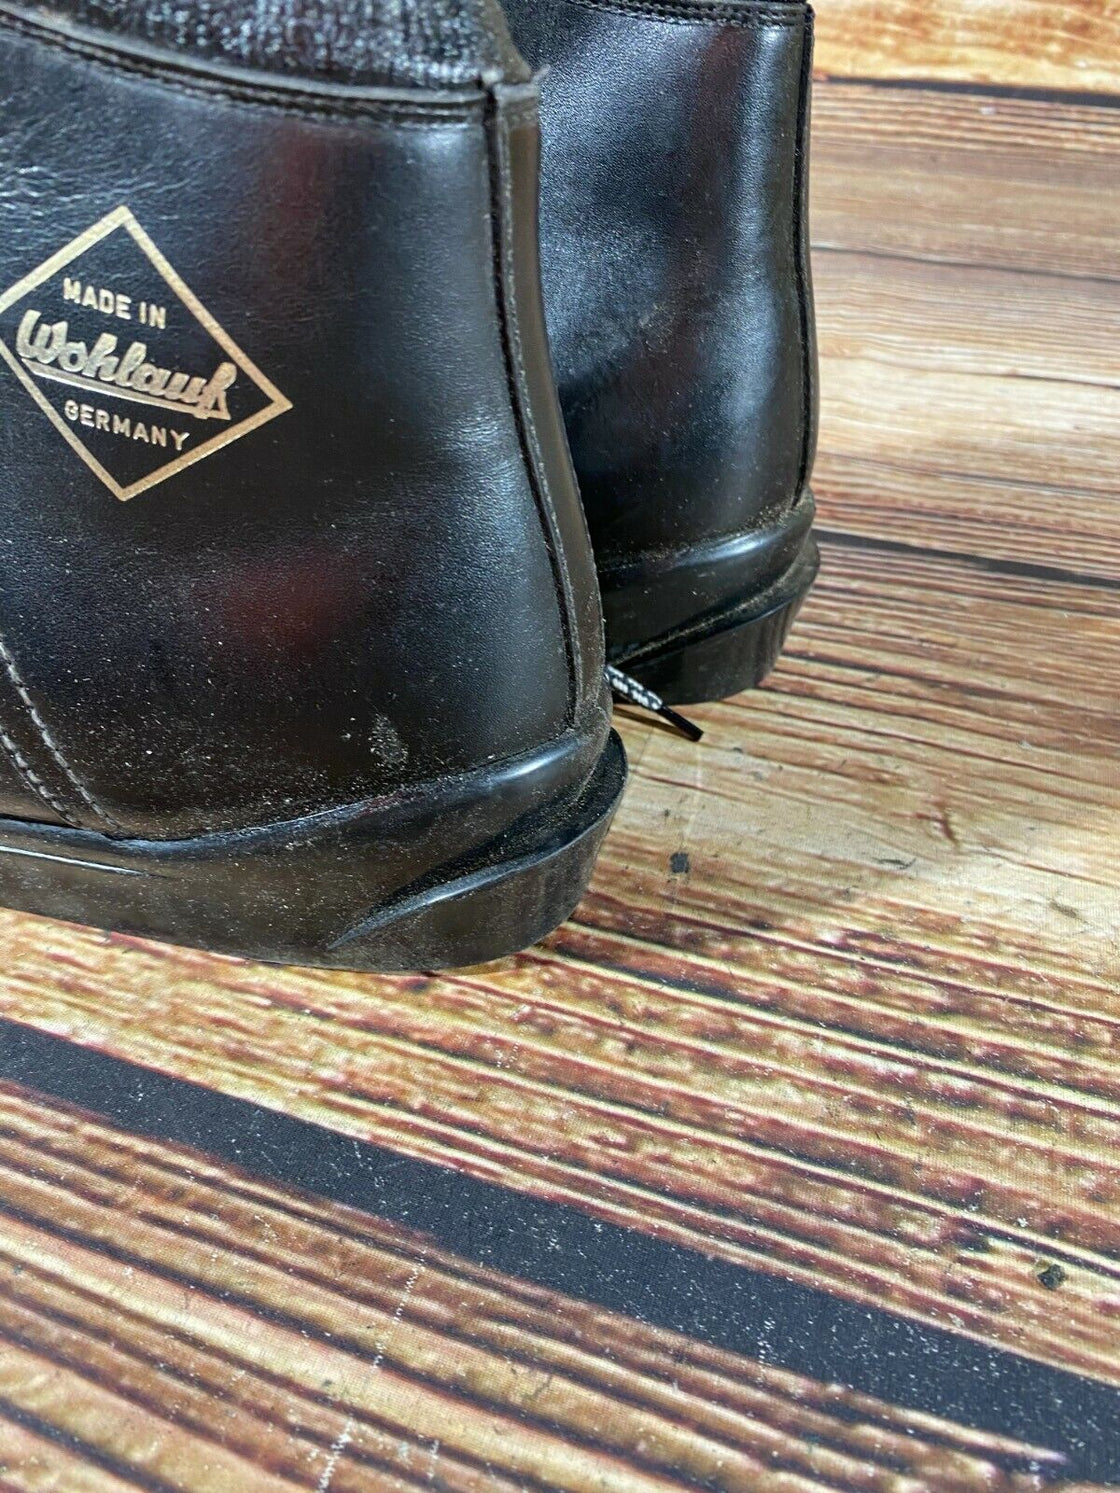 WOHLAUF Leather Vintage Alpine Ski Boots EU41, US7.5, Mondo 265 Cable Bindings